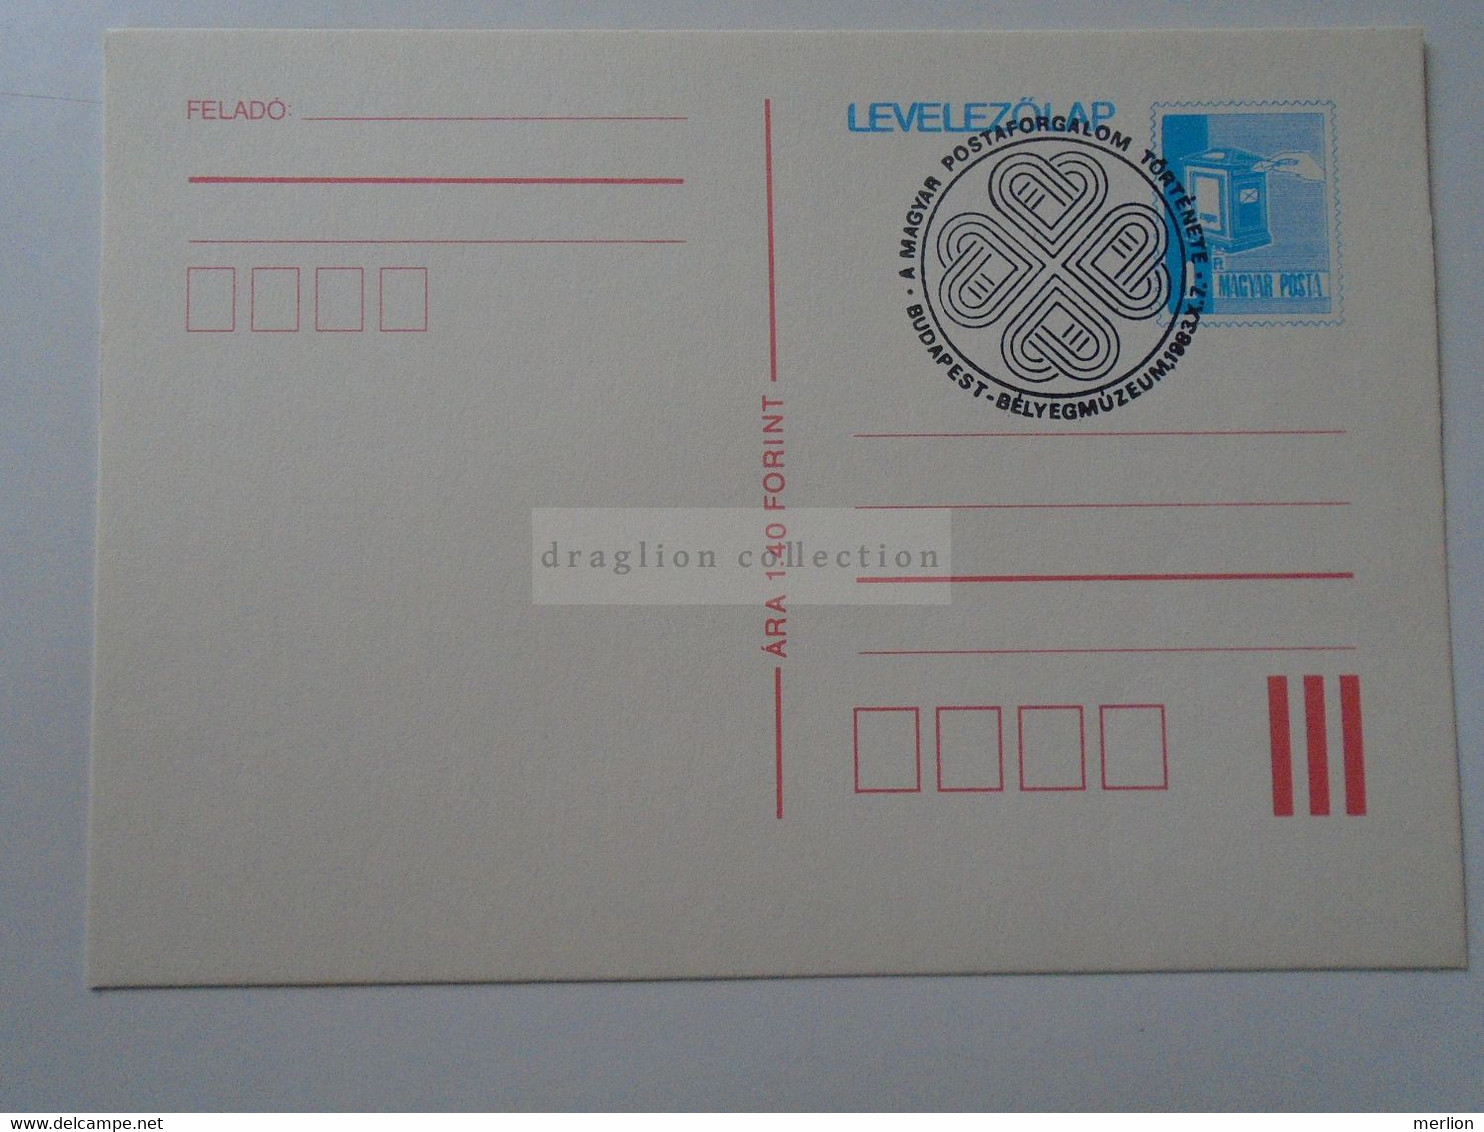 D187099  HUNGARY- Stationery - Postmark  MAGYAR POSTA   - Hungarian Post - Bélyegmúzeum - Postatörténet  1983 BP - Marcophilie